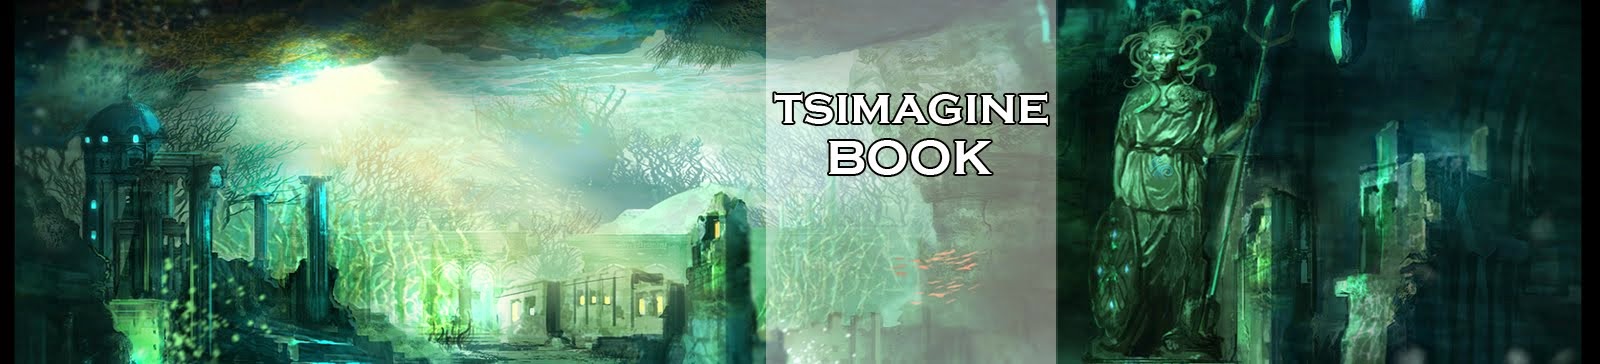 tsimagine-BOOK